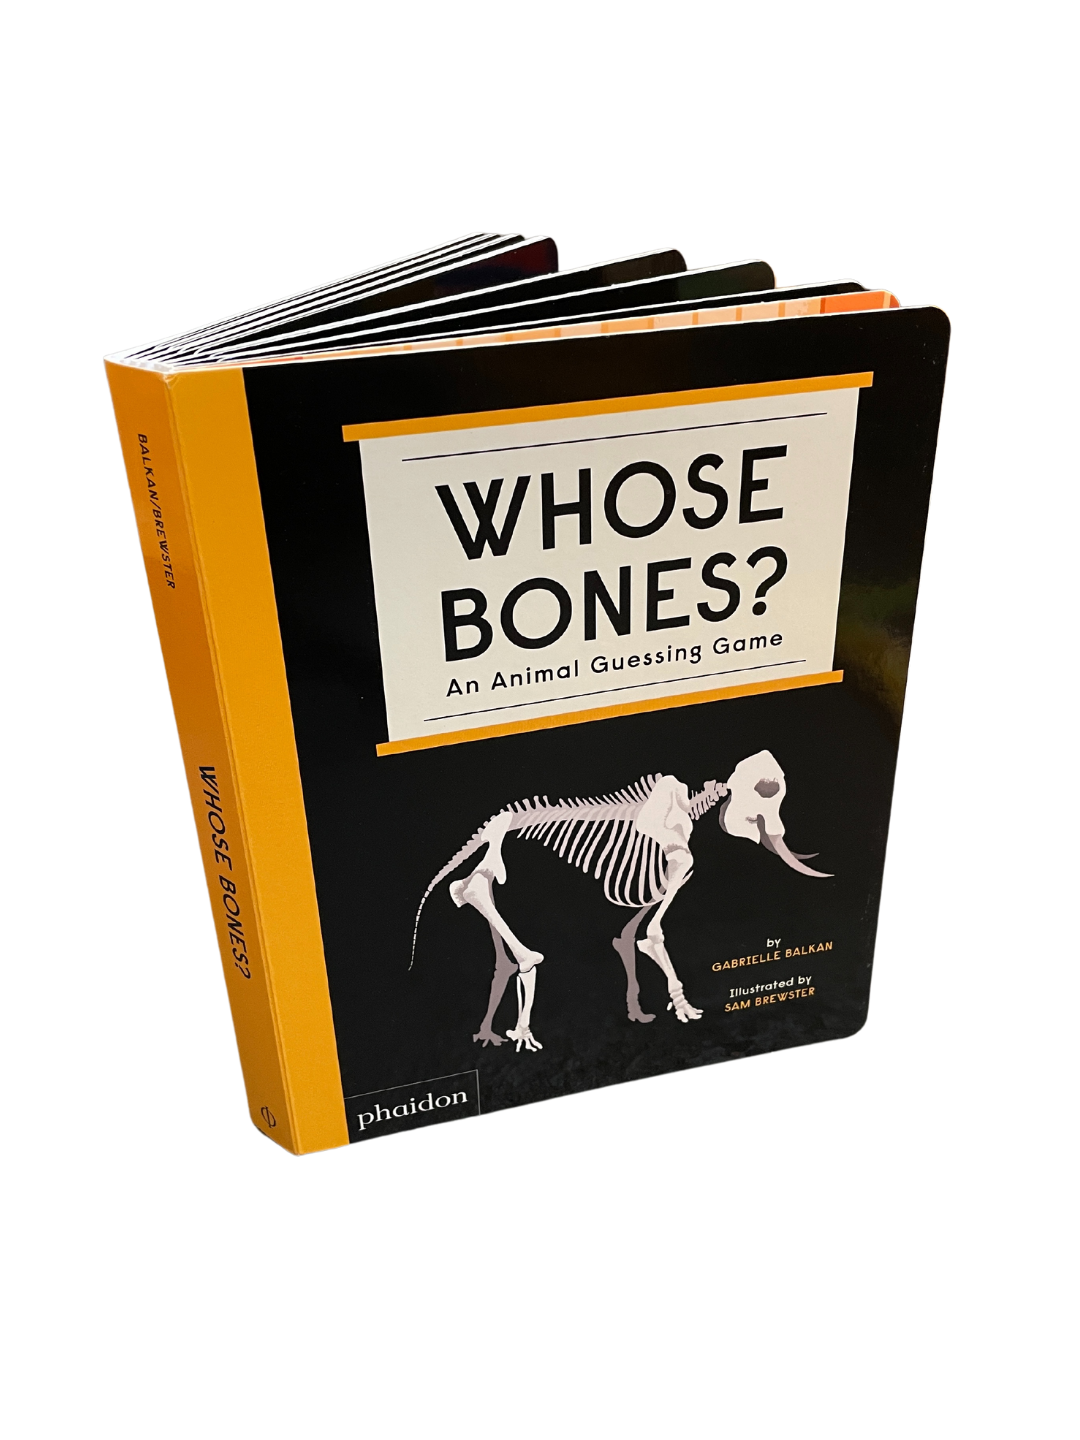 Whose Bones?